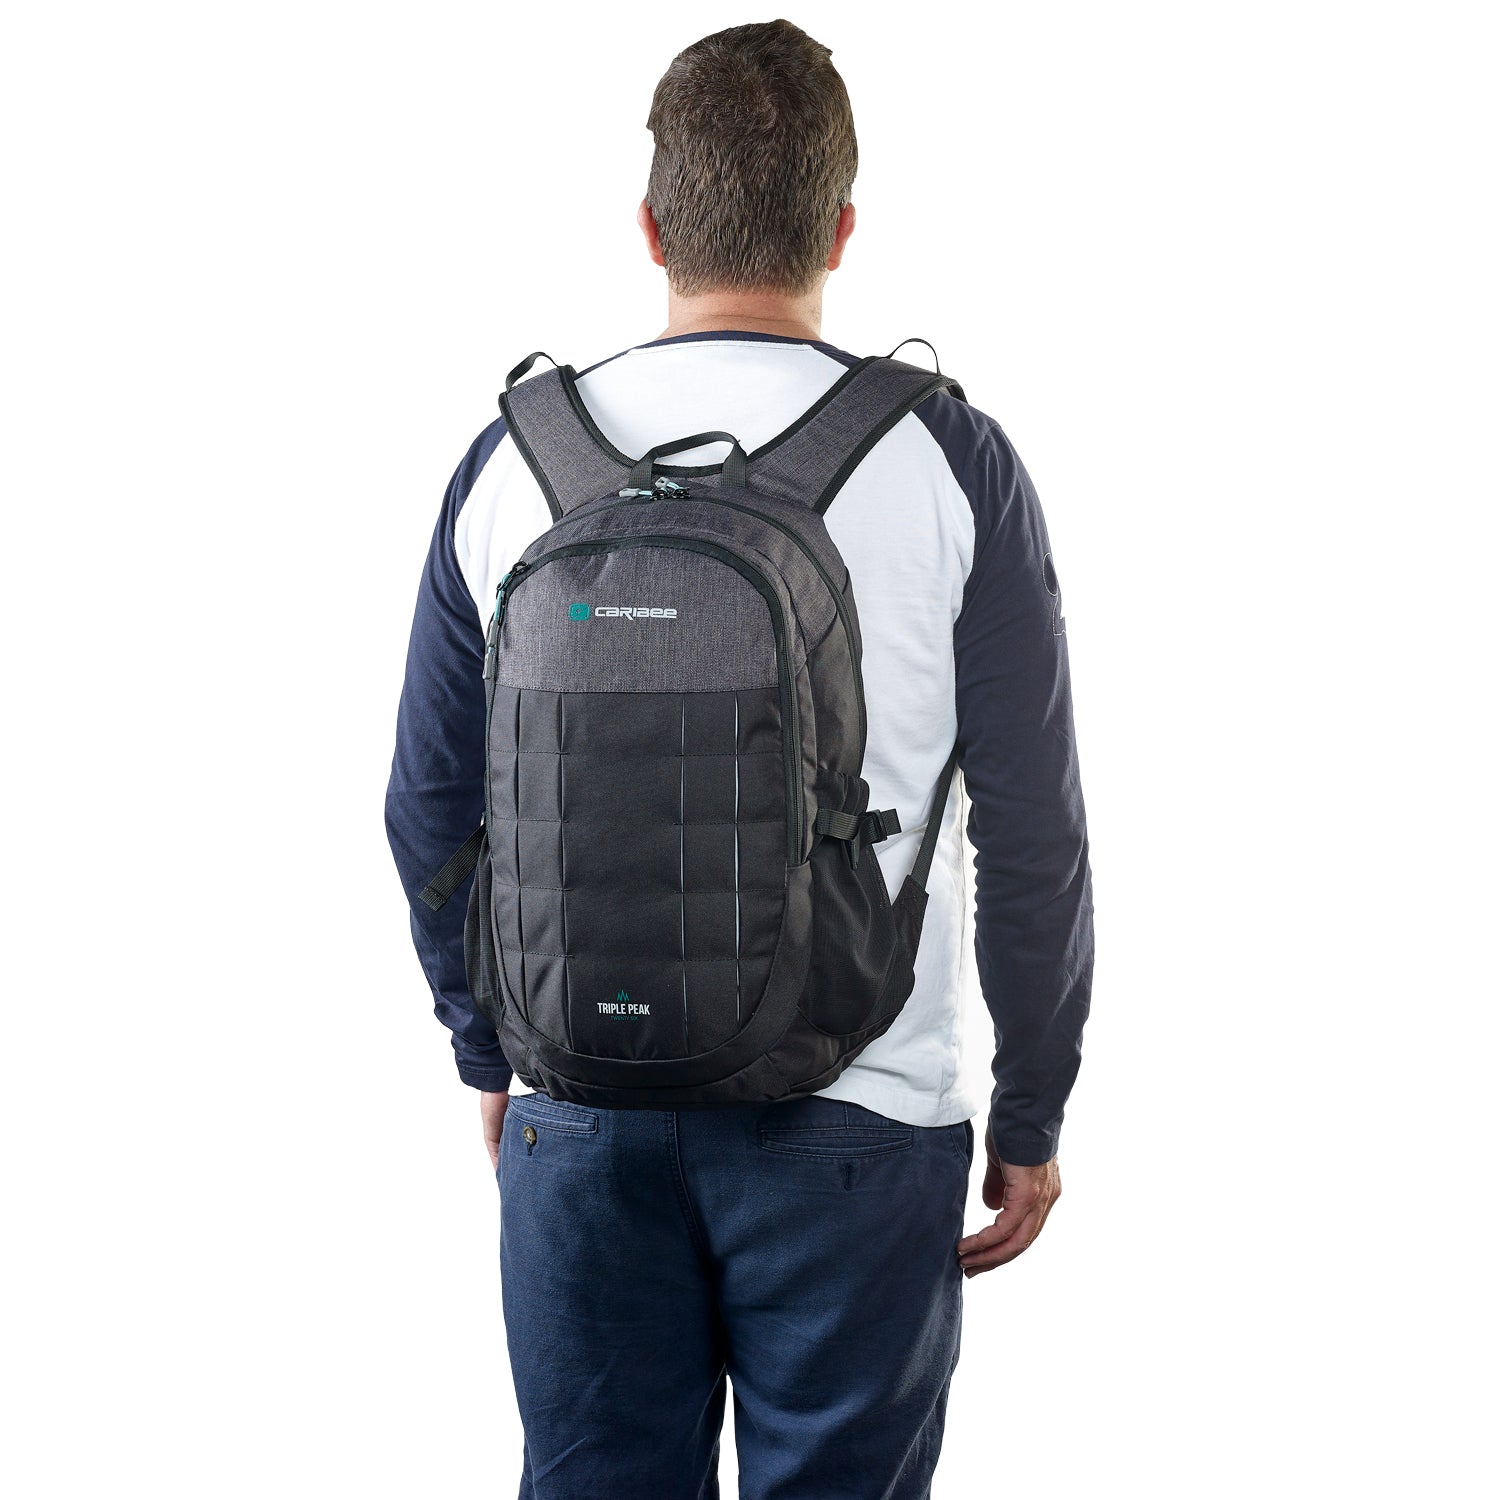 Caribee Triple Peak 26L backpack black on model